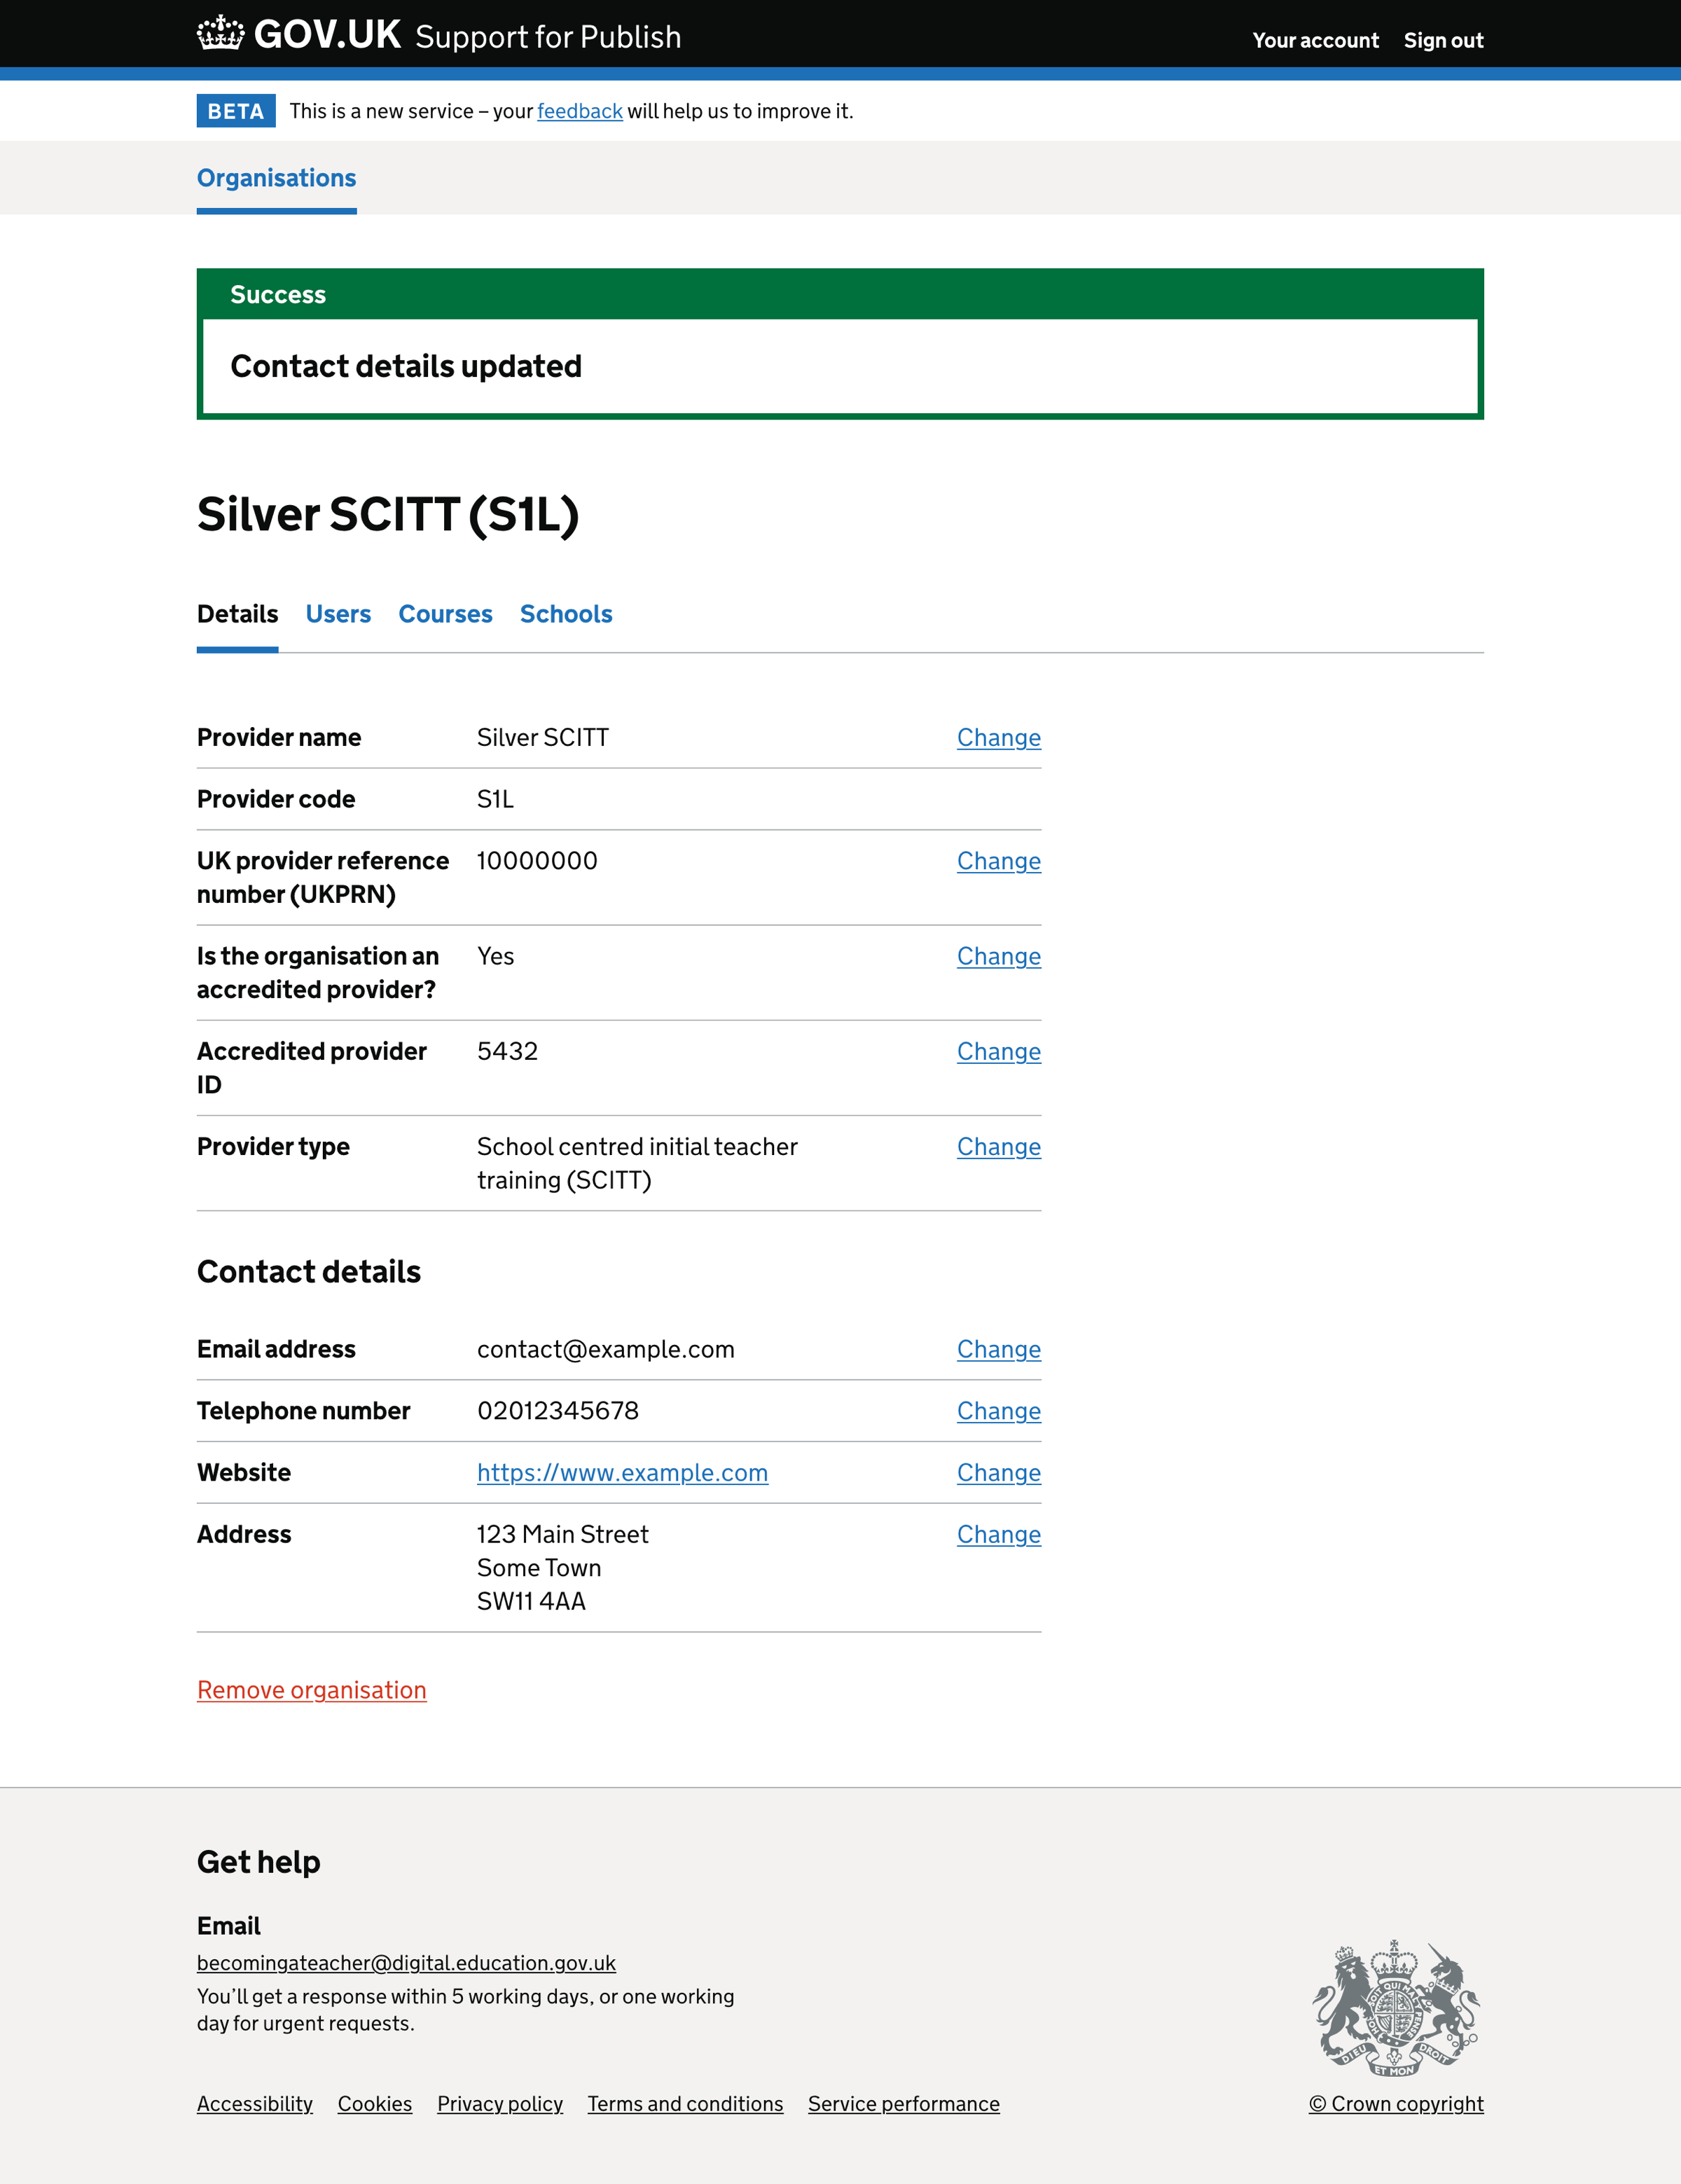 Screenshot of Edit organisation contact details - success